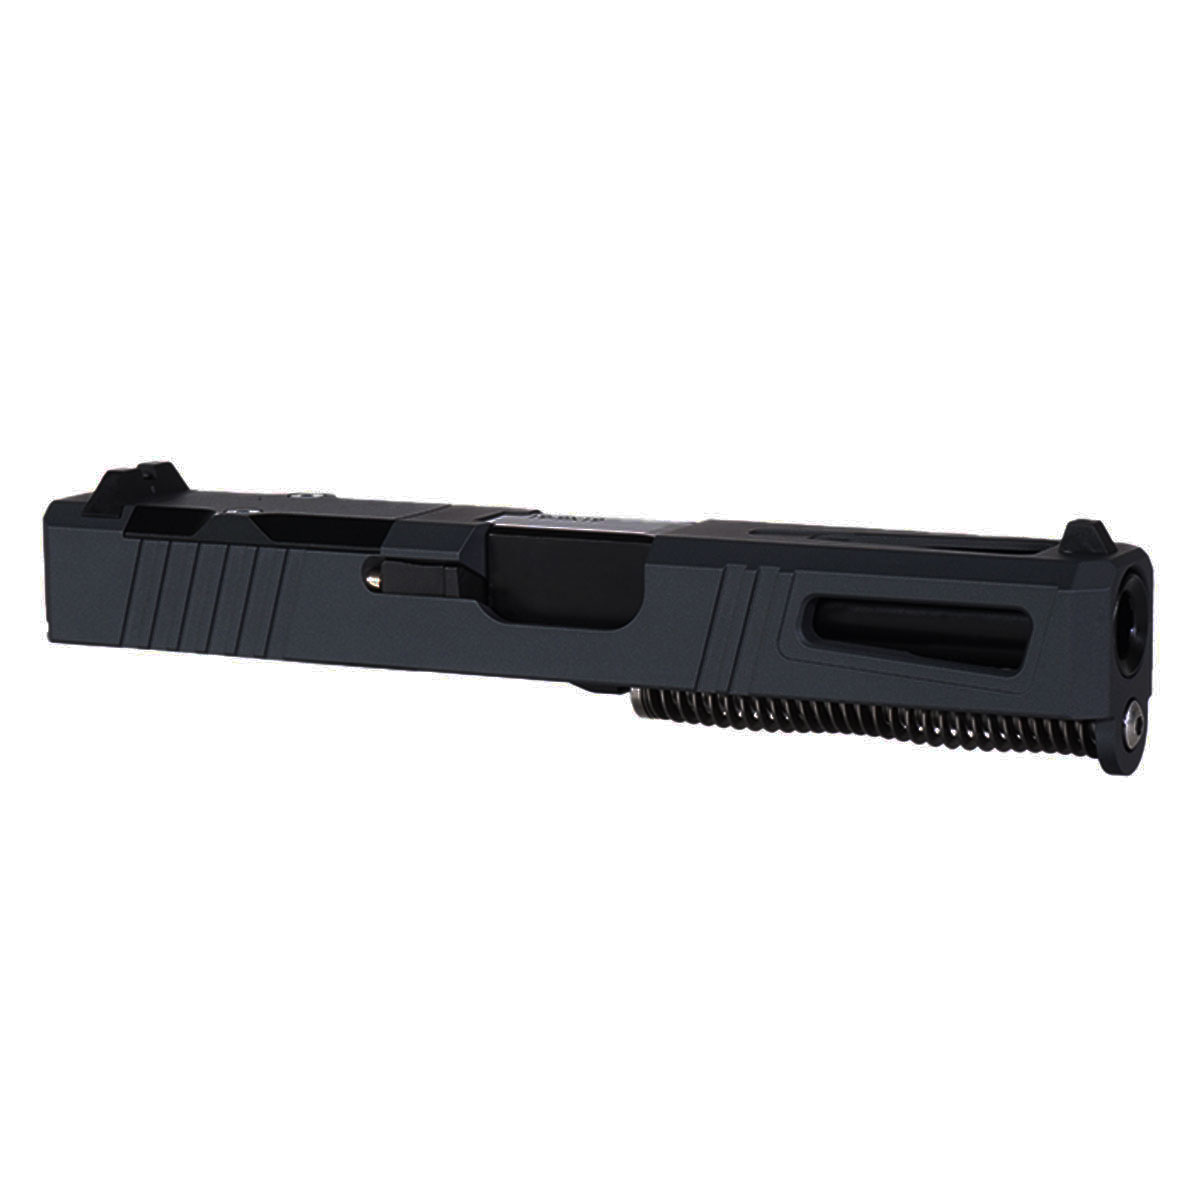 DD 'Apollo' 9mm Complete Slide Kit - Glock 19 Gen 1-3 Compatible